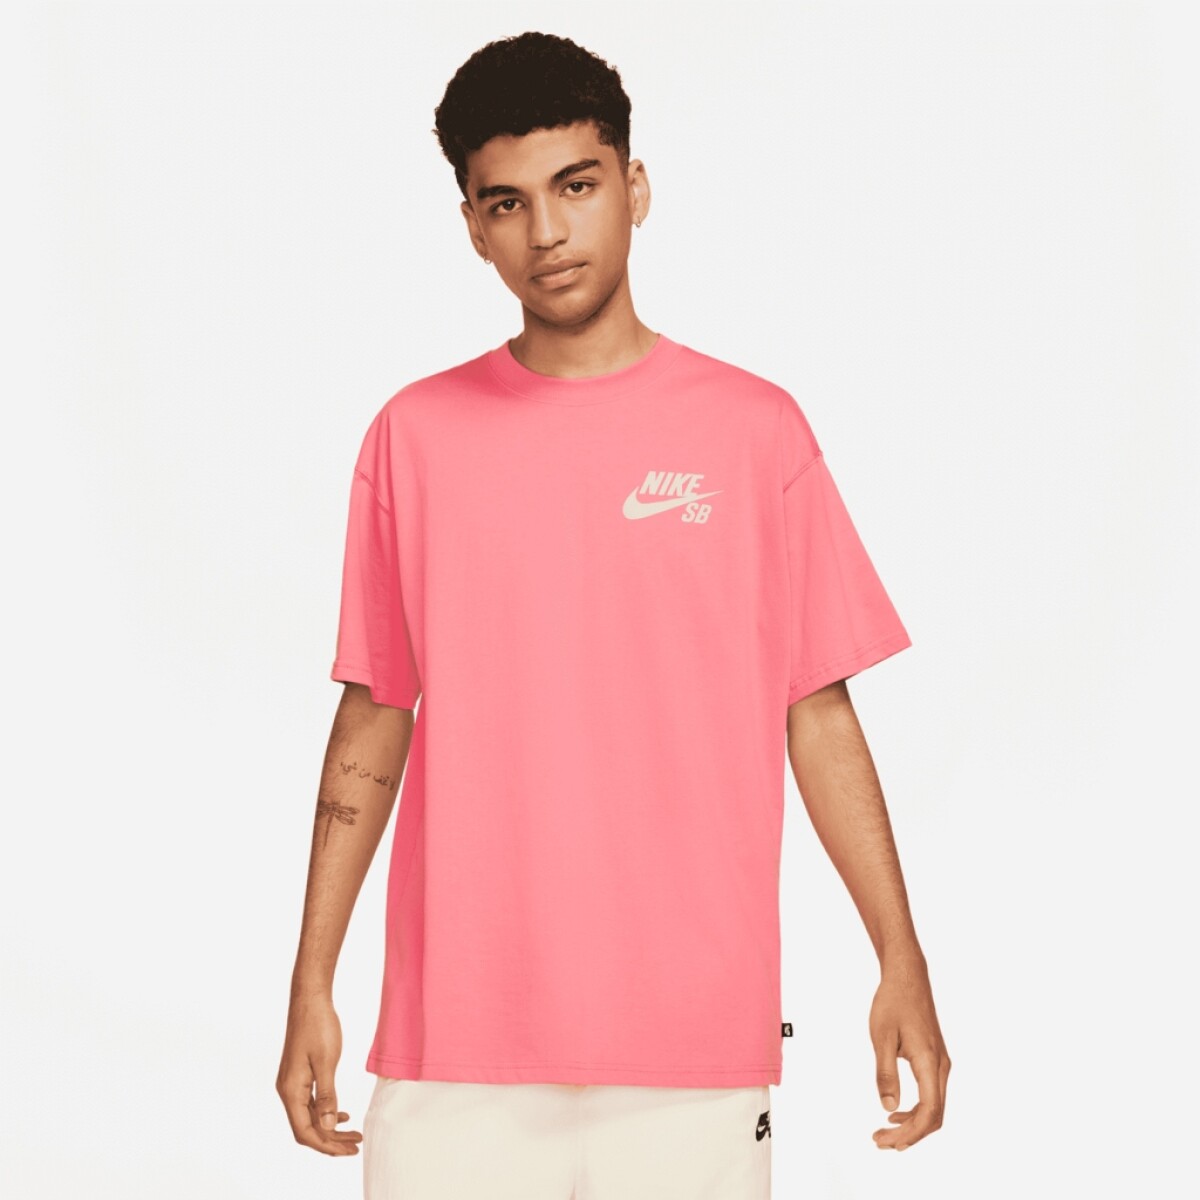 Remera Nike Moda Hombre SB Tee Logo Pink - S/C 